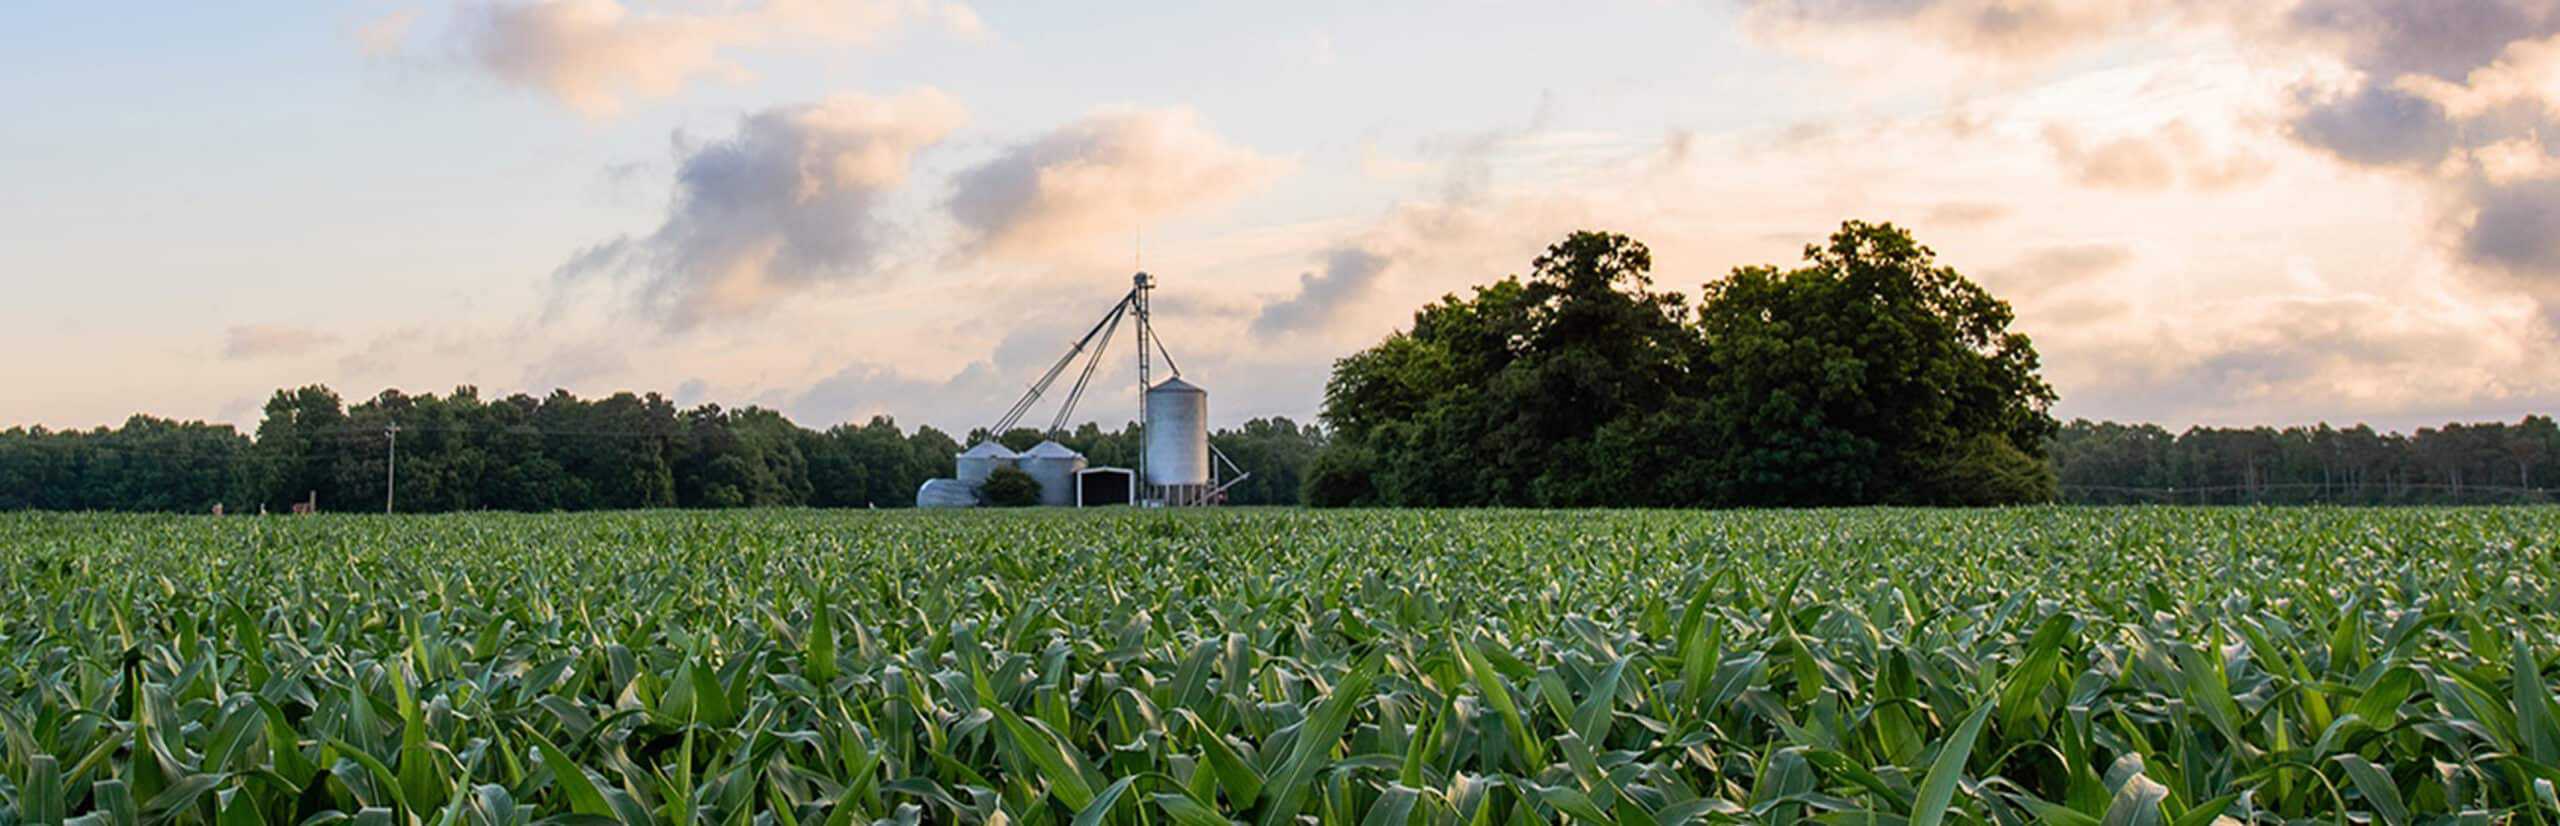 North Carolina Farmer Consolidates Farm Debt with $7.0MM Short Term Loan